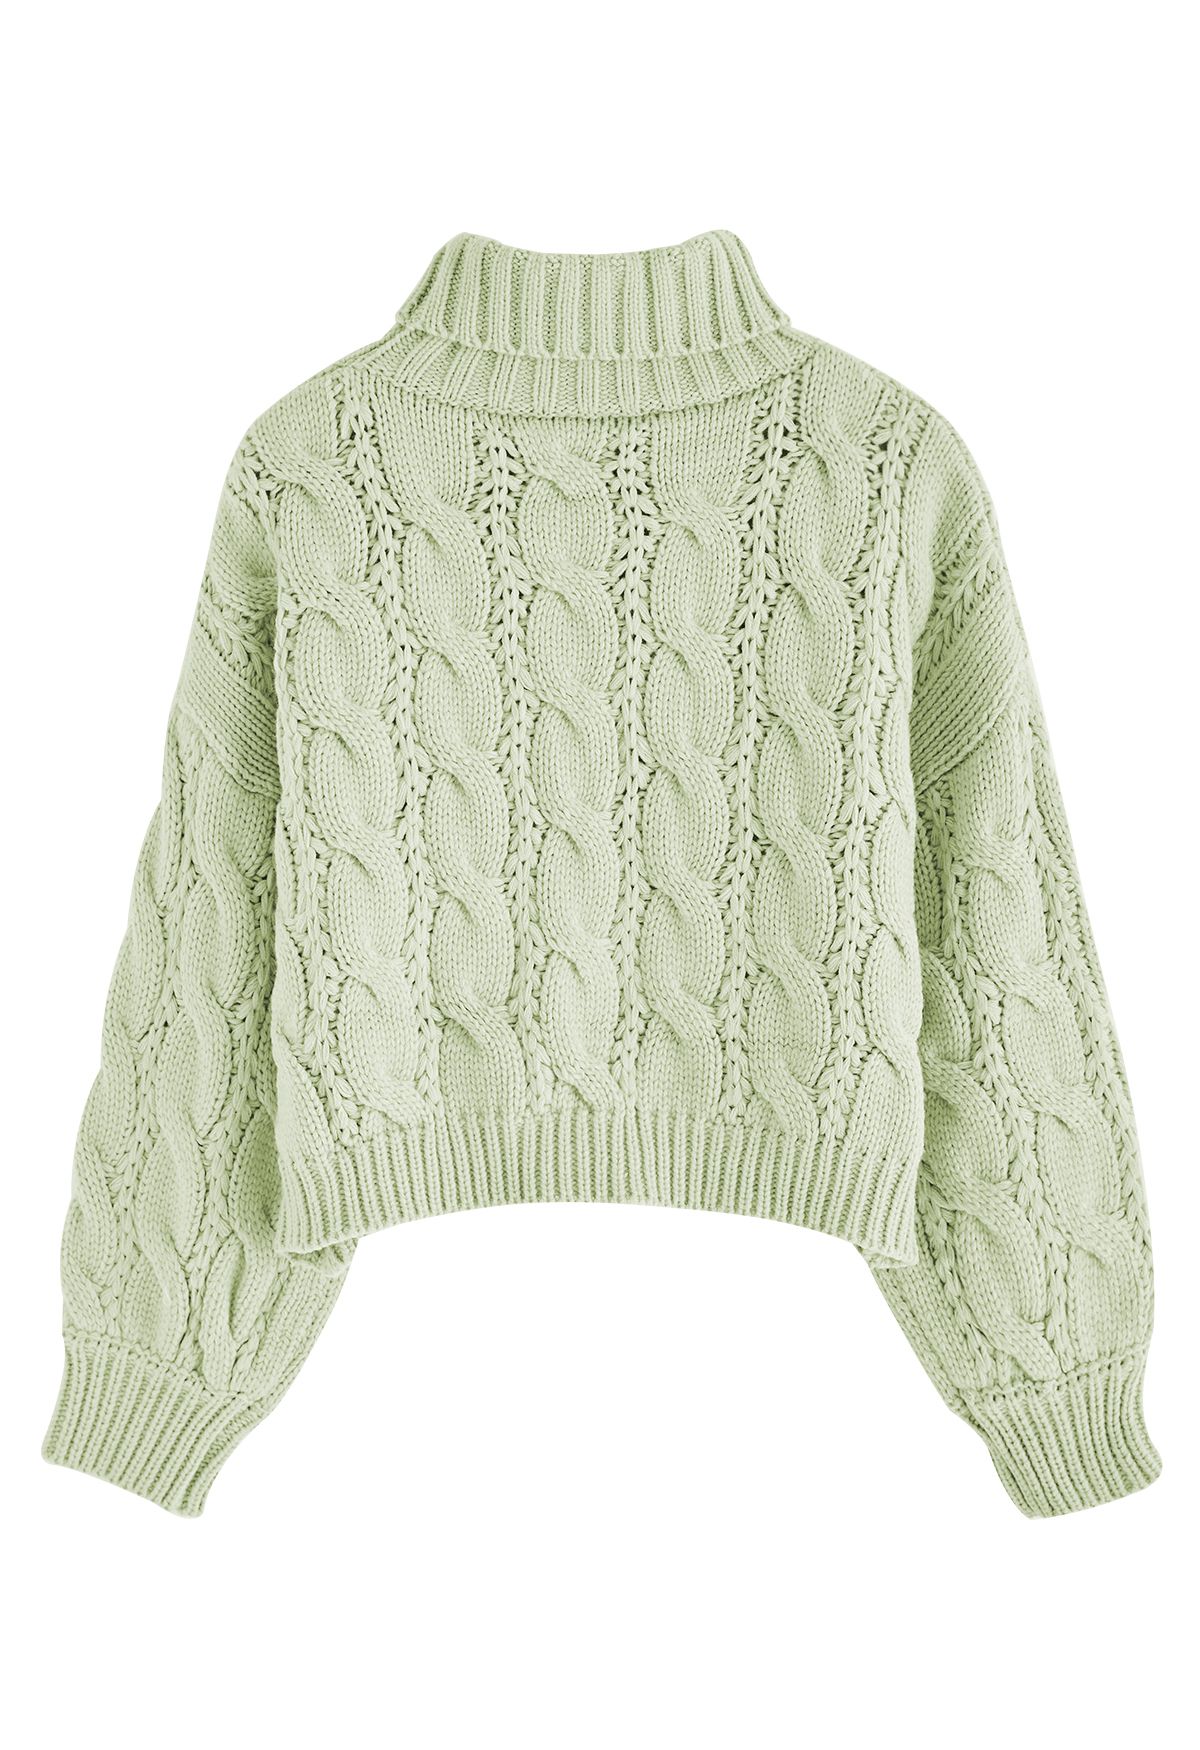 Turtleneck Braid Knit Crop Sweater in Pea Green